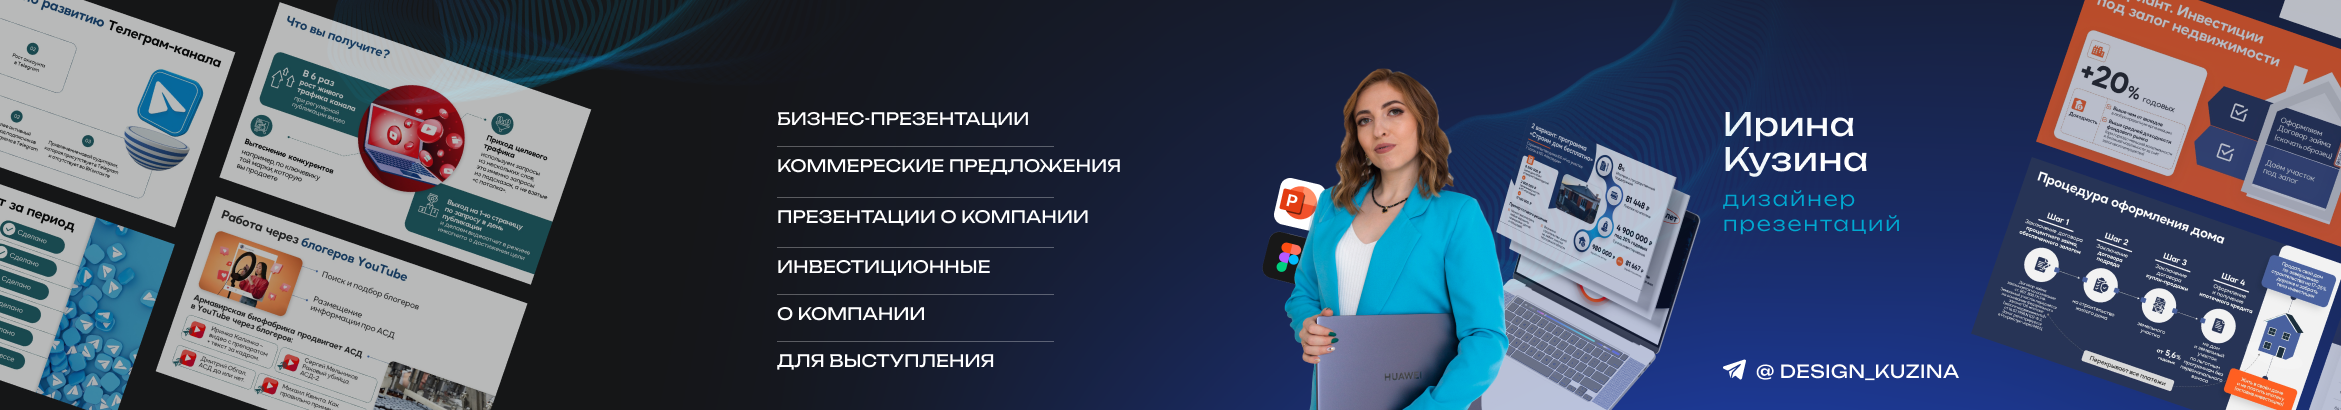 Ирина Кузина | Дизайнер презентаций's profile banner